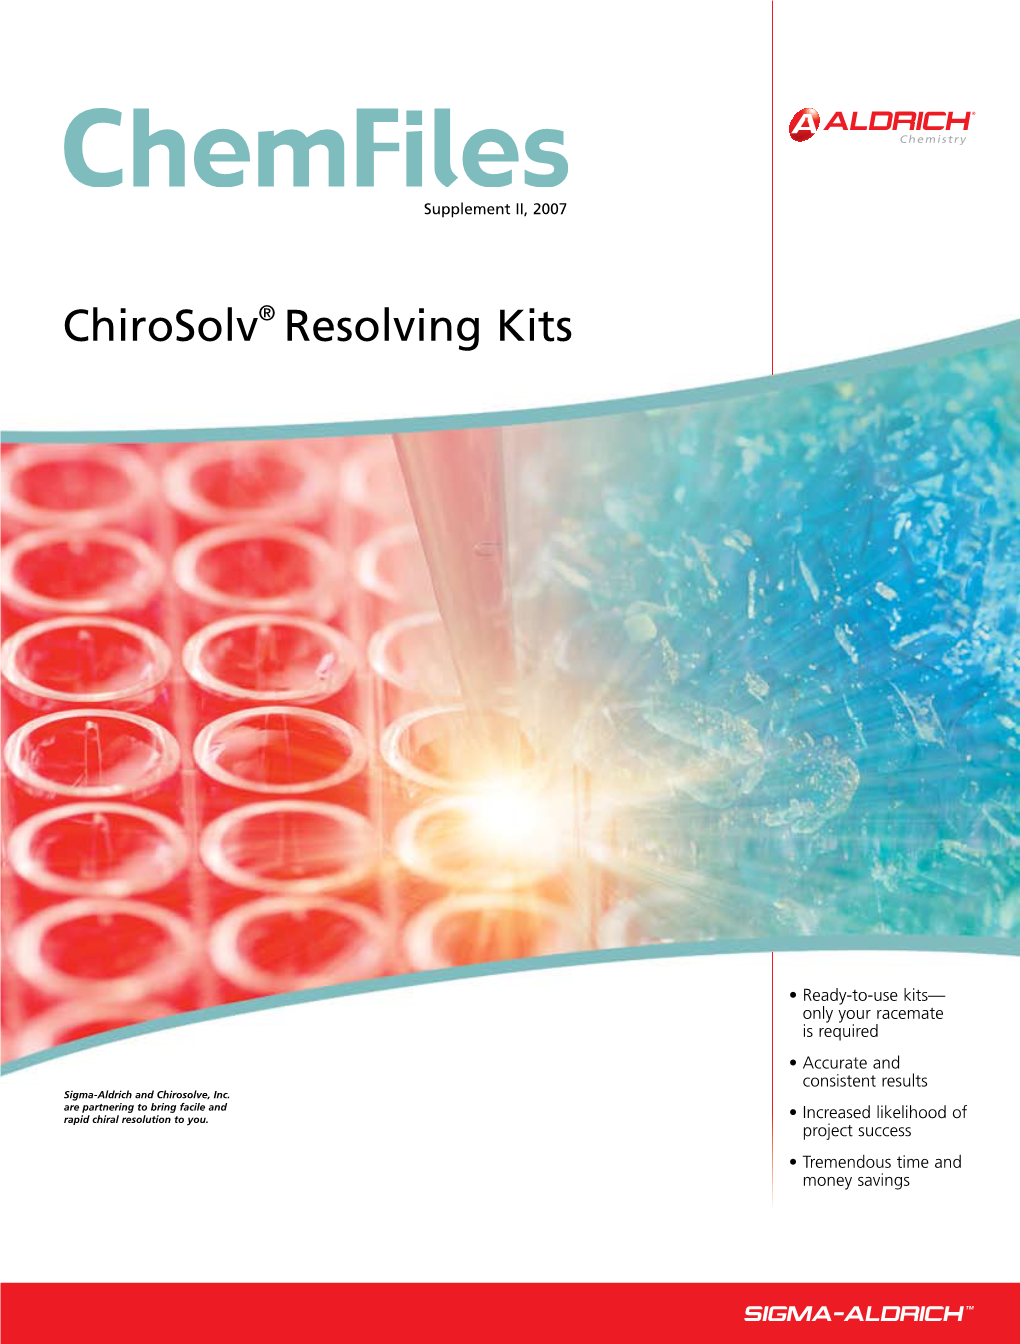 Chirosolv Resolving Kits